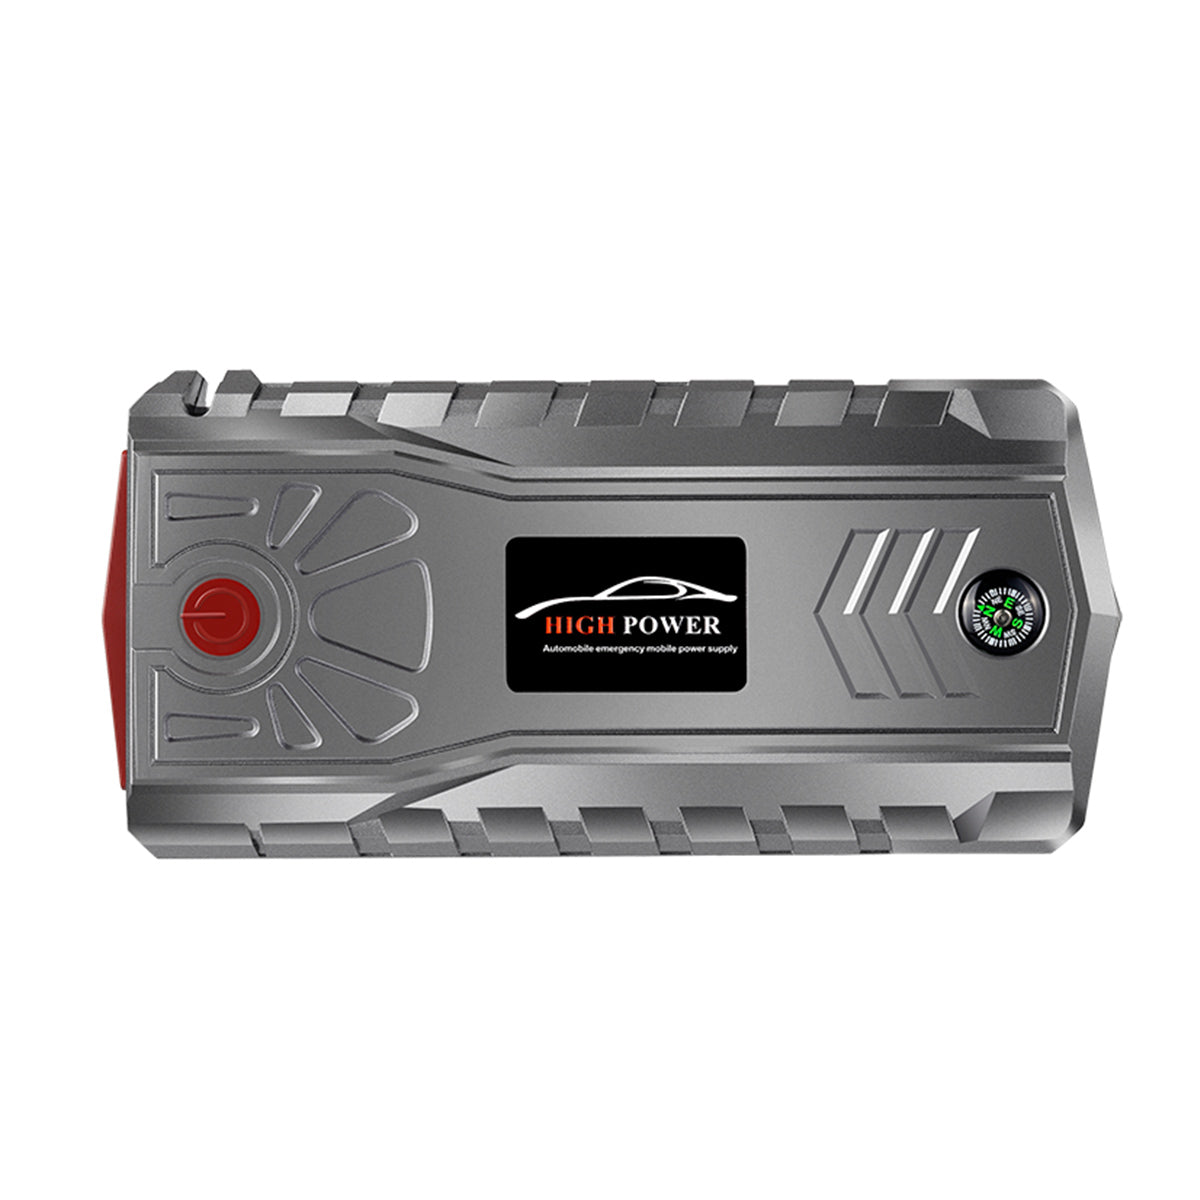 Dim Gray Portable Car Jump Starter 15000mAh 800A Peak Powerbank Emergency Battery Booster Type-C Digital Charger with LED Flashlight USB Port